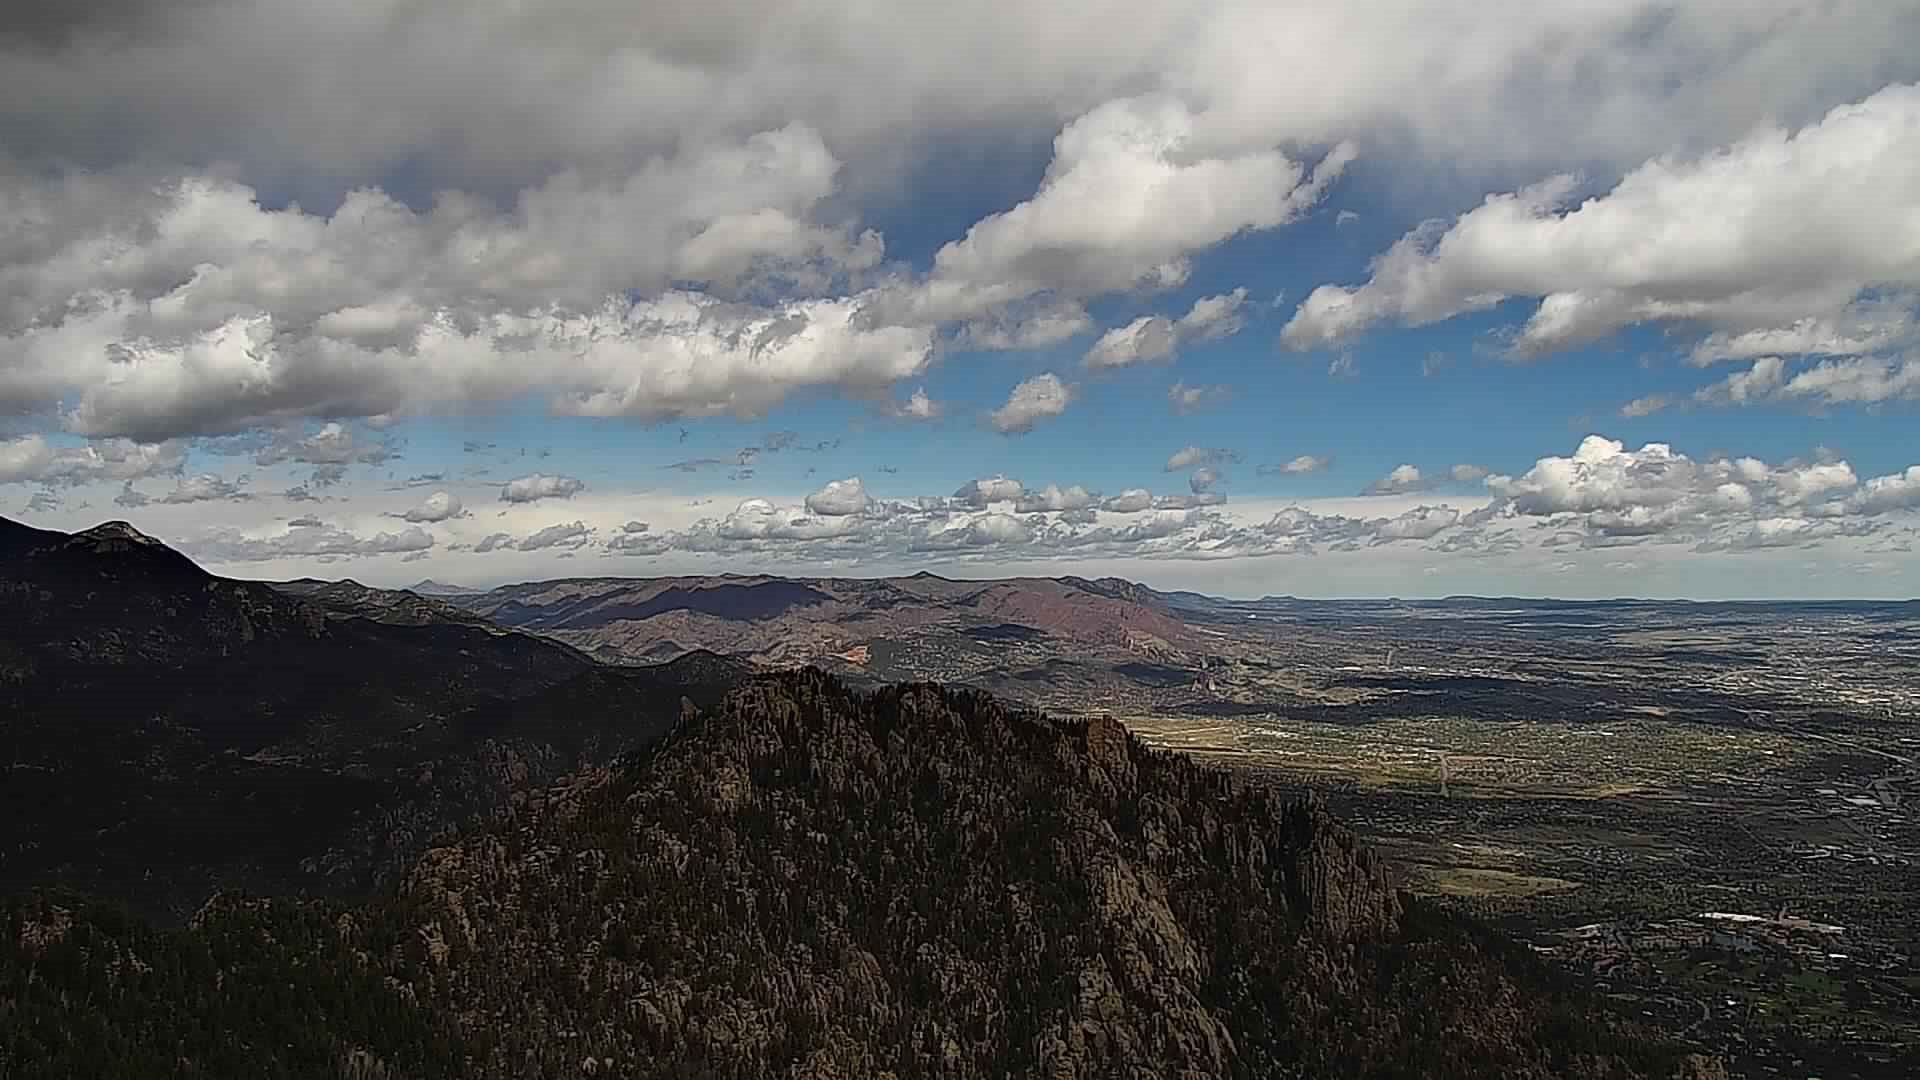 Cheyenne Mountain